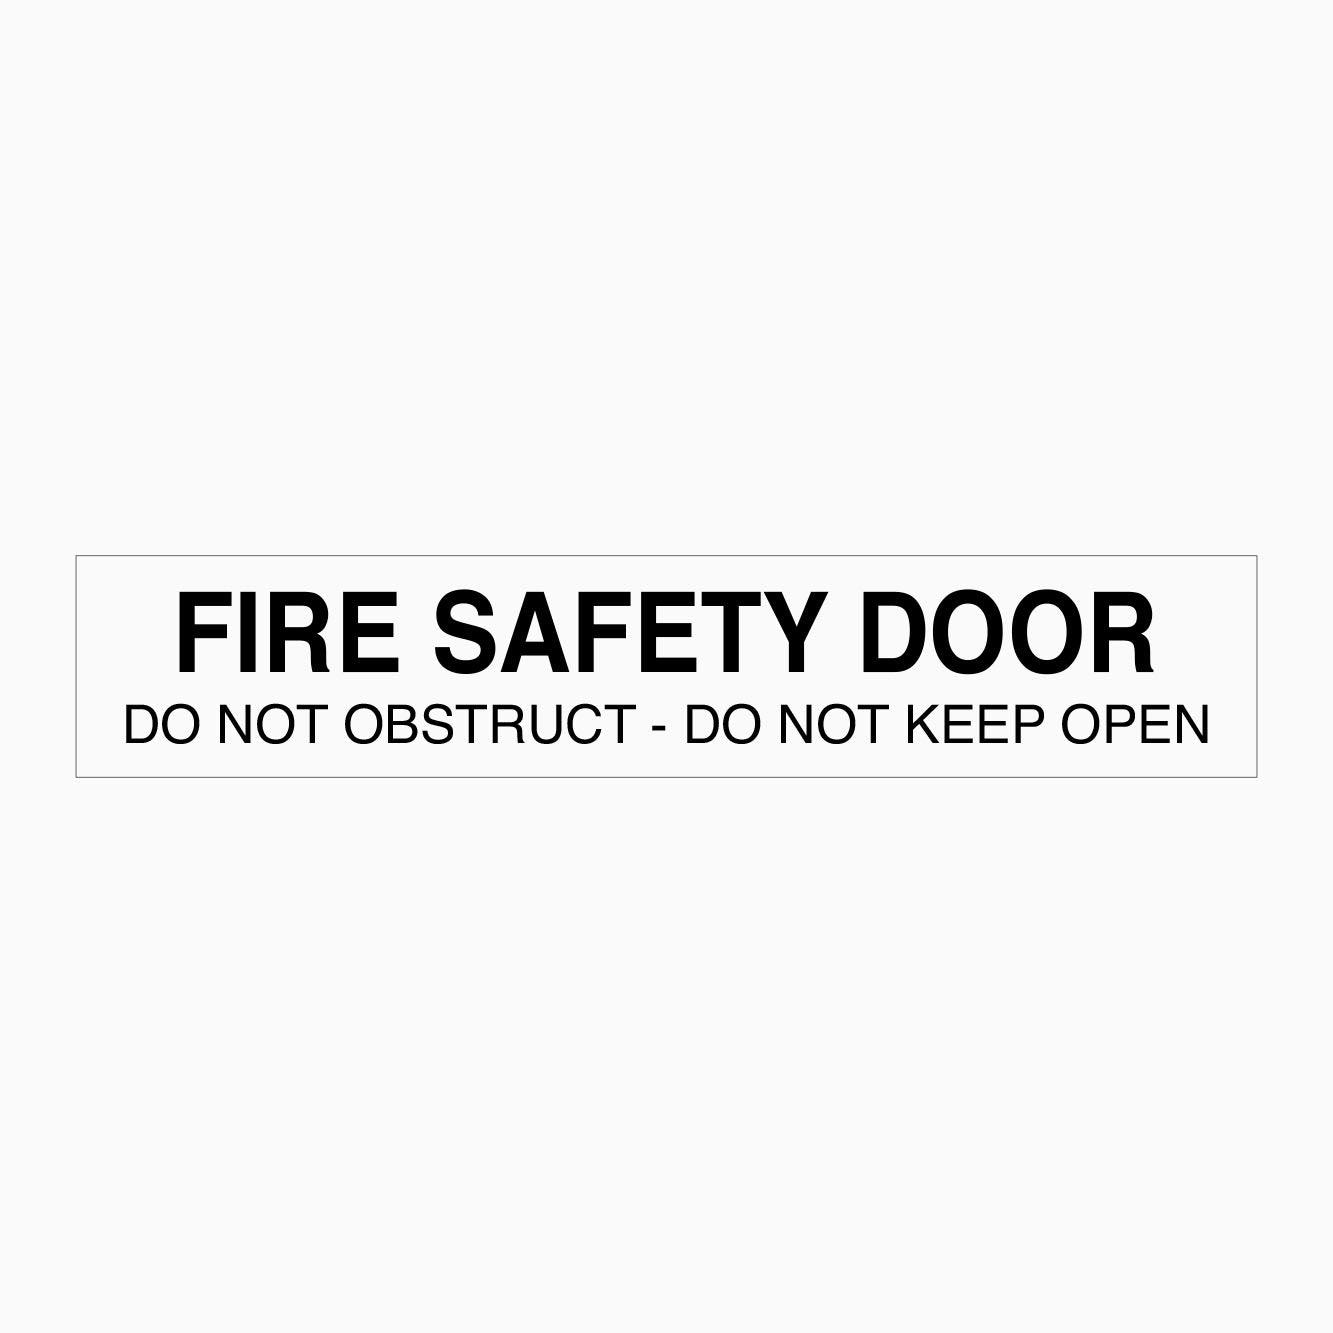 FIRE SAFETY DOOR - DO NOT OBSTRUCT - DO NOT KEEP OPEN SIGN